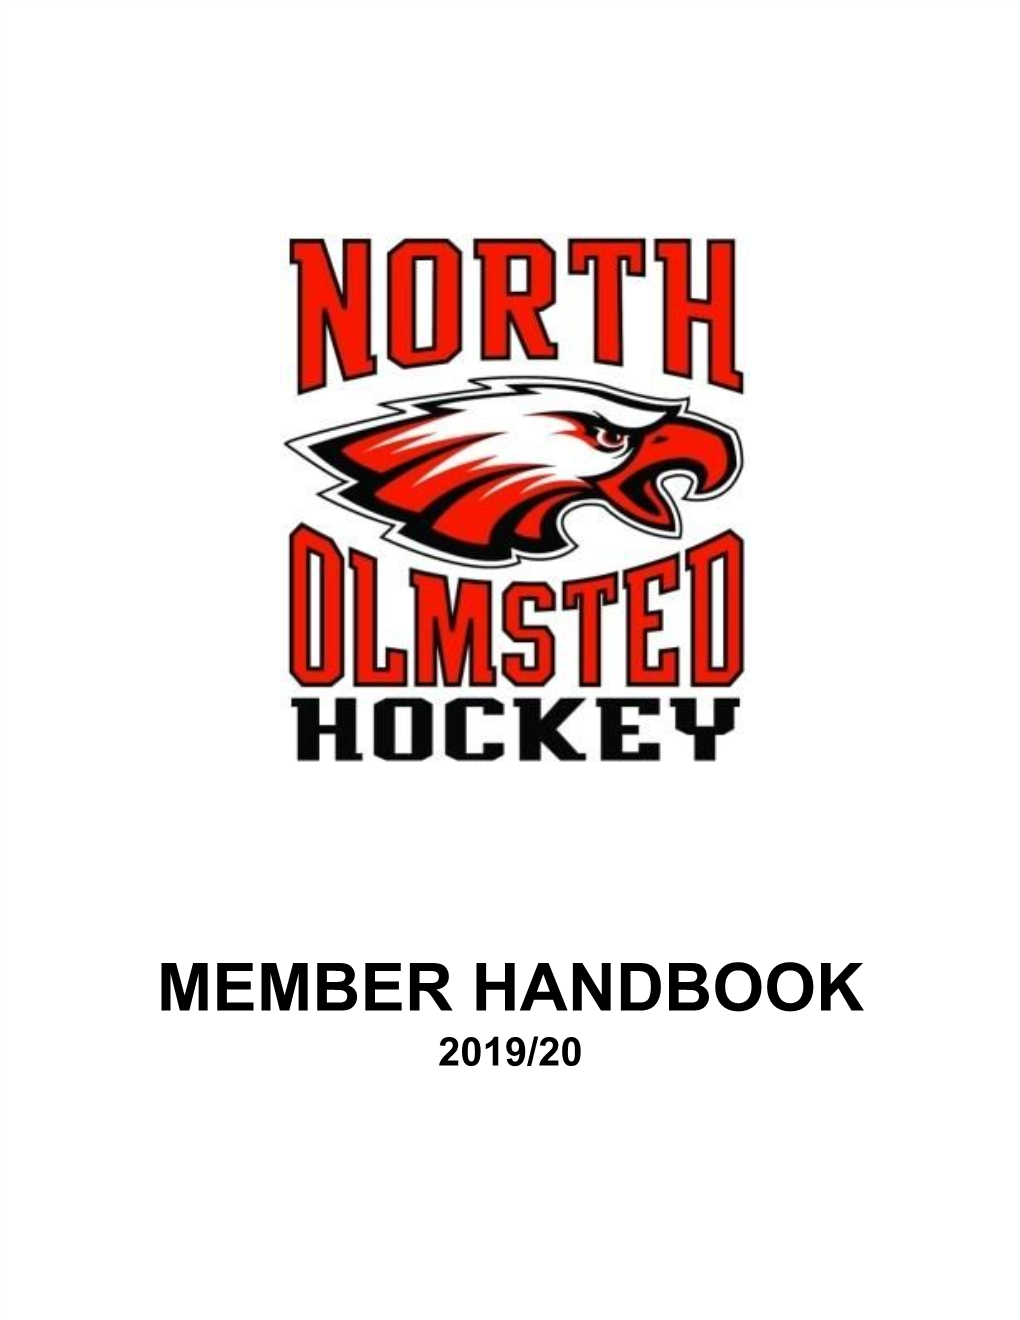 Member Handbook 2019/20